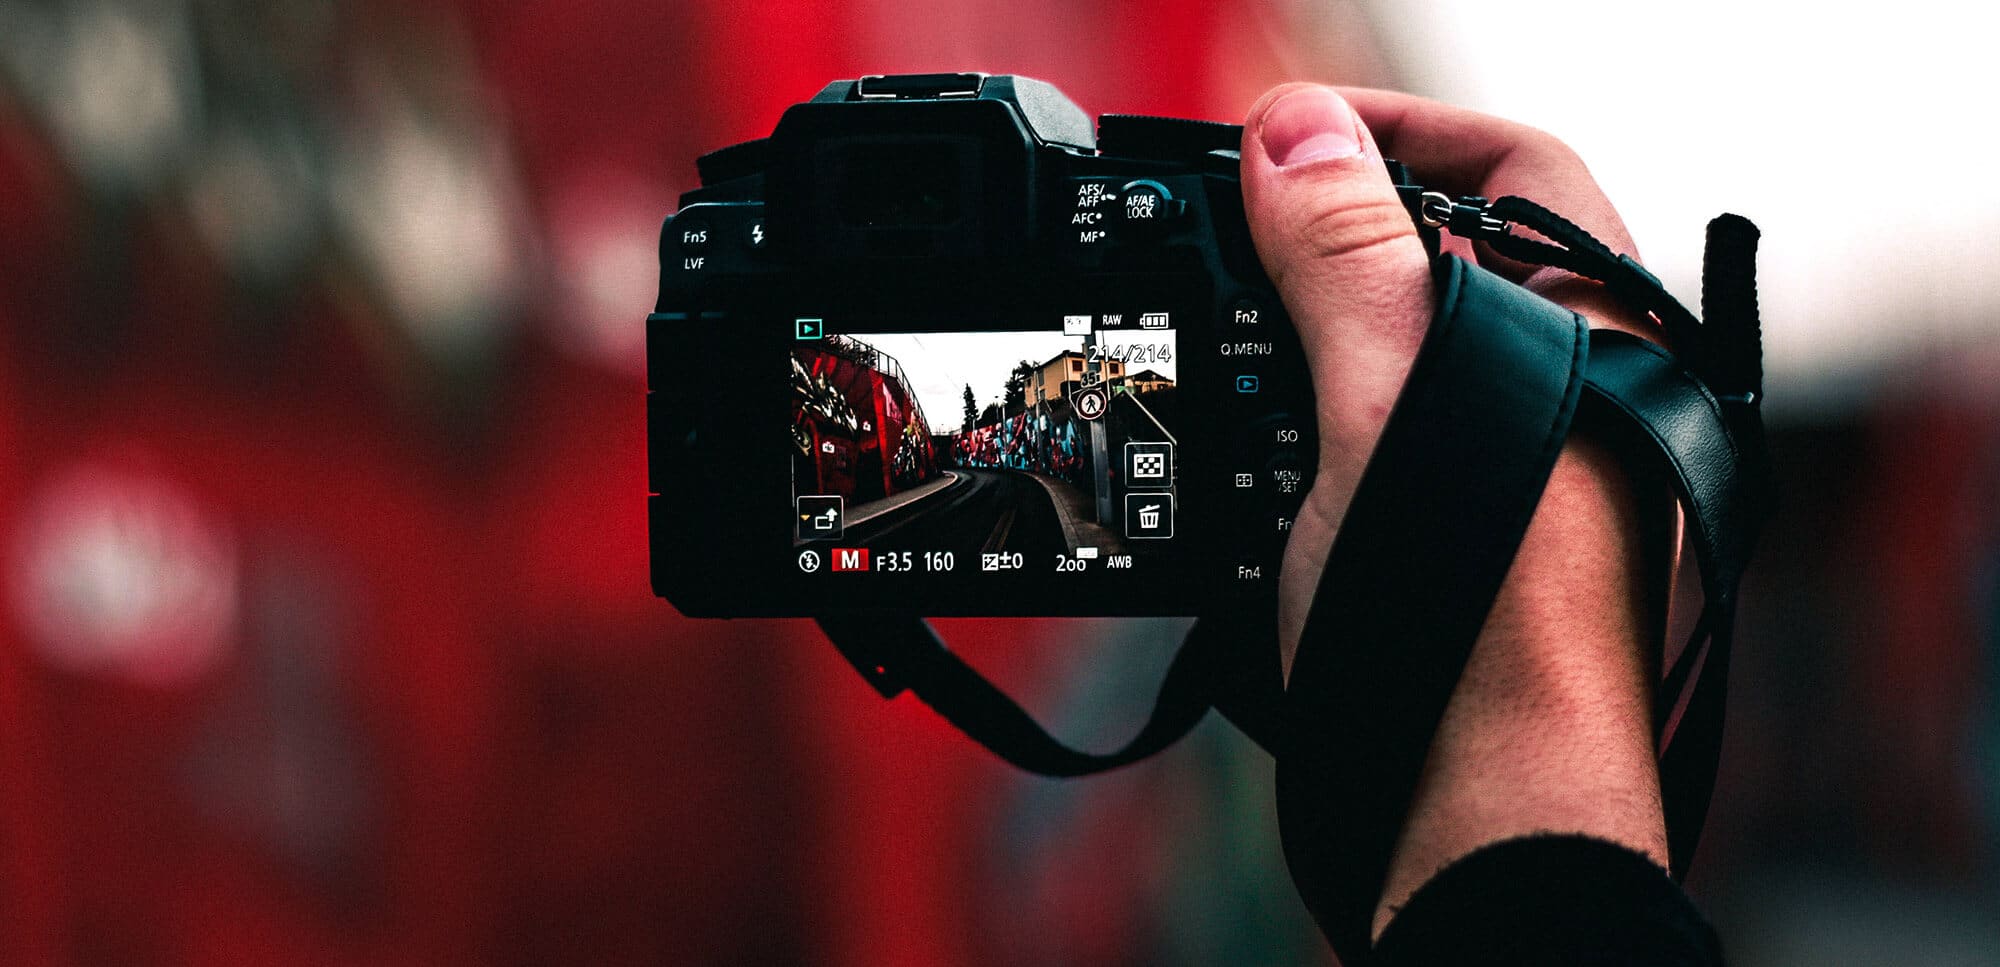 Cámaras fotográficas: tips para comprar tu primera cámara